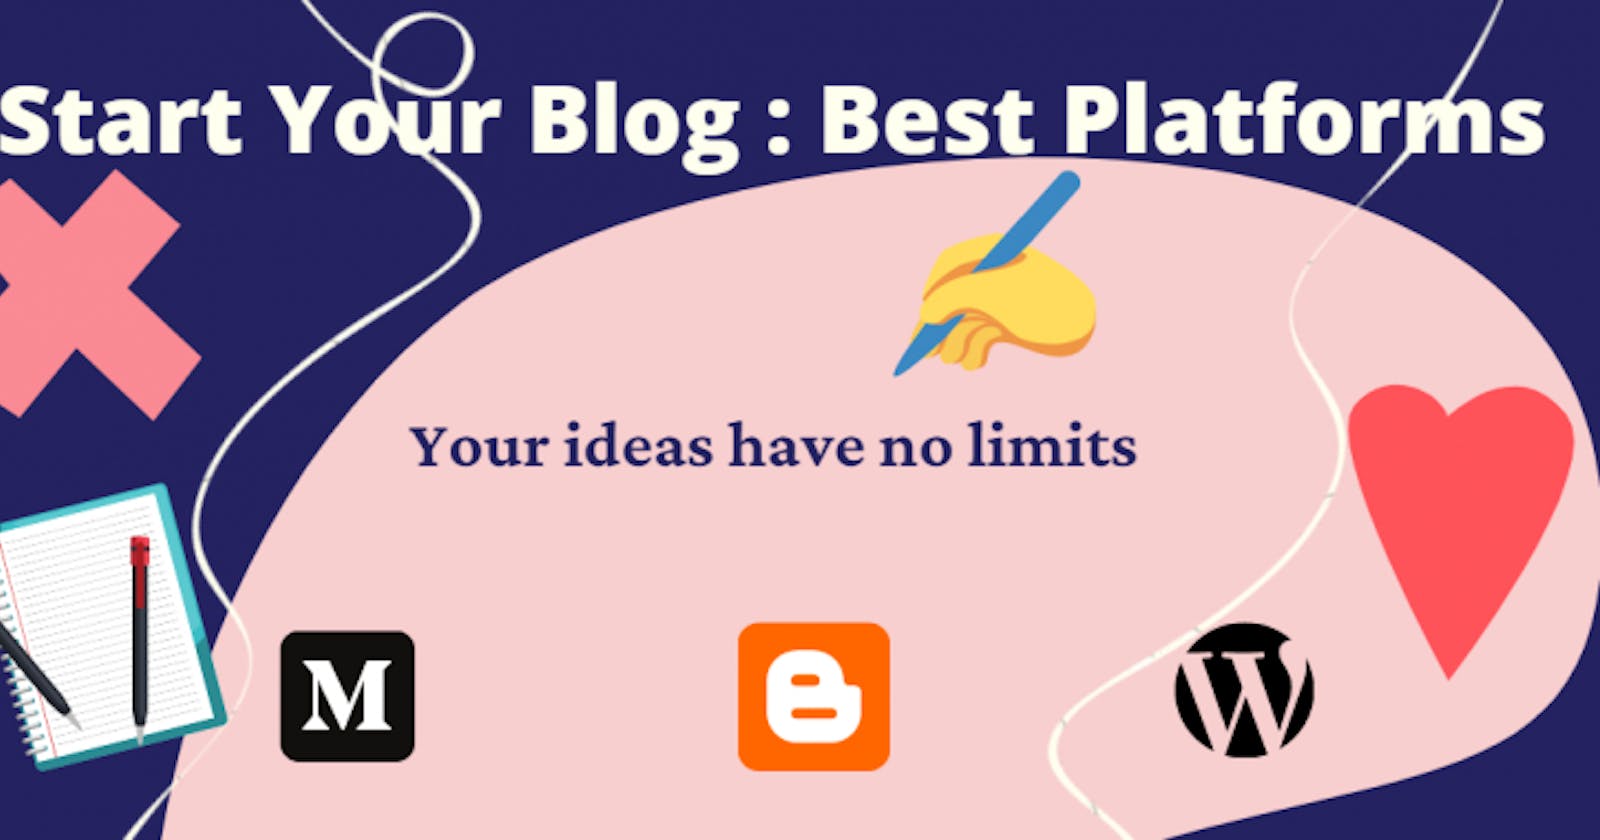 Start Your Blog for Free : Best Platforms